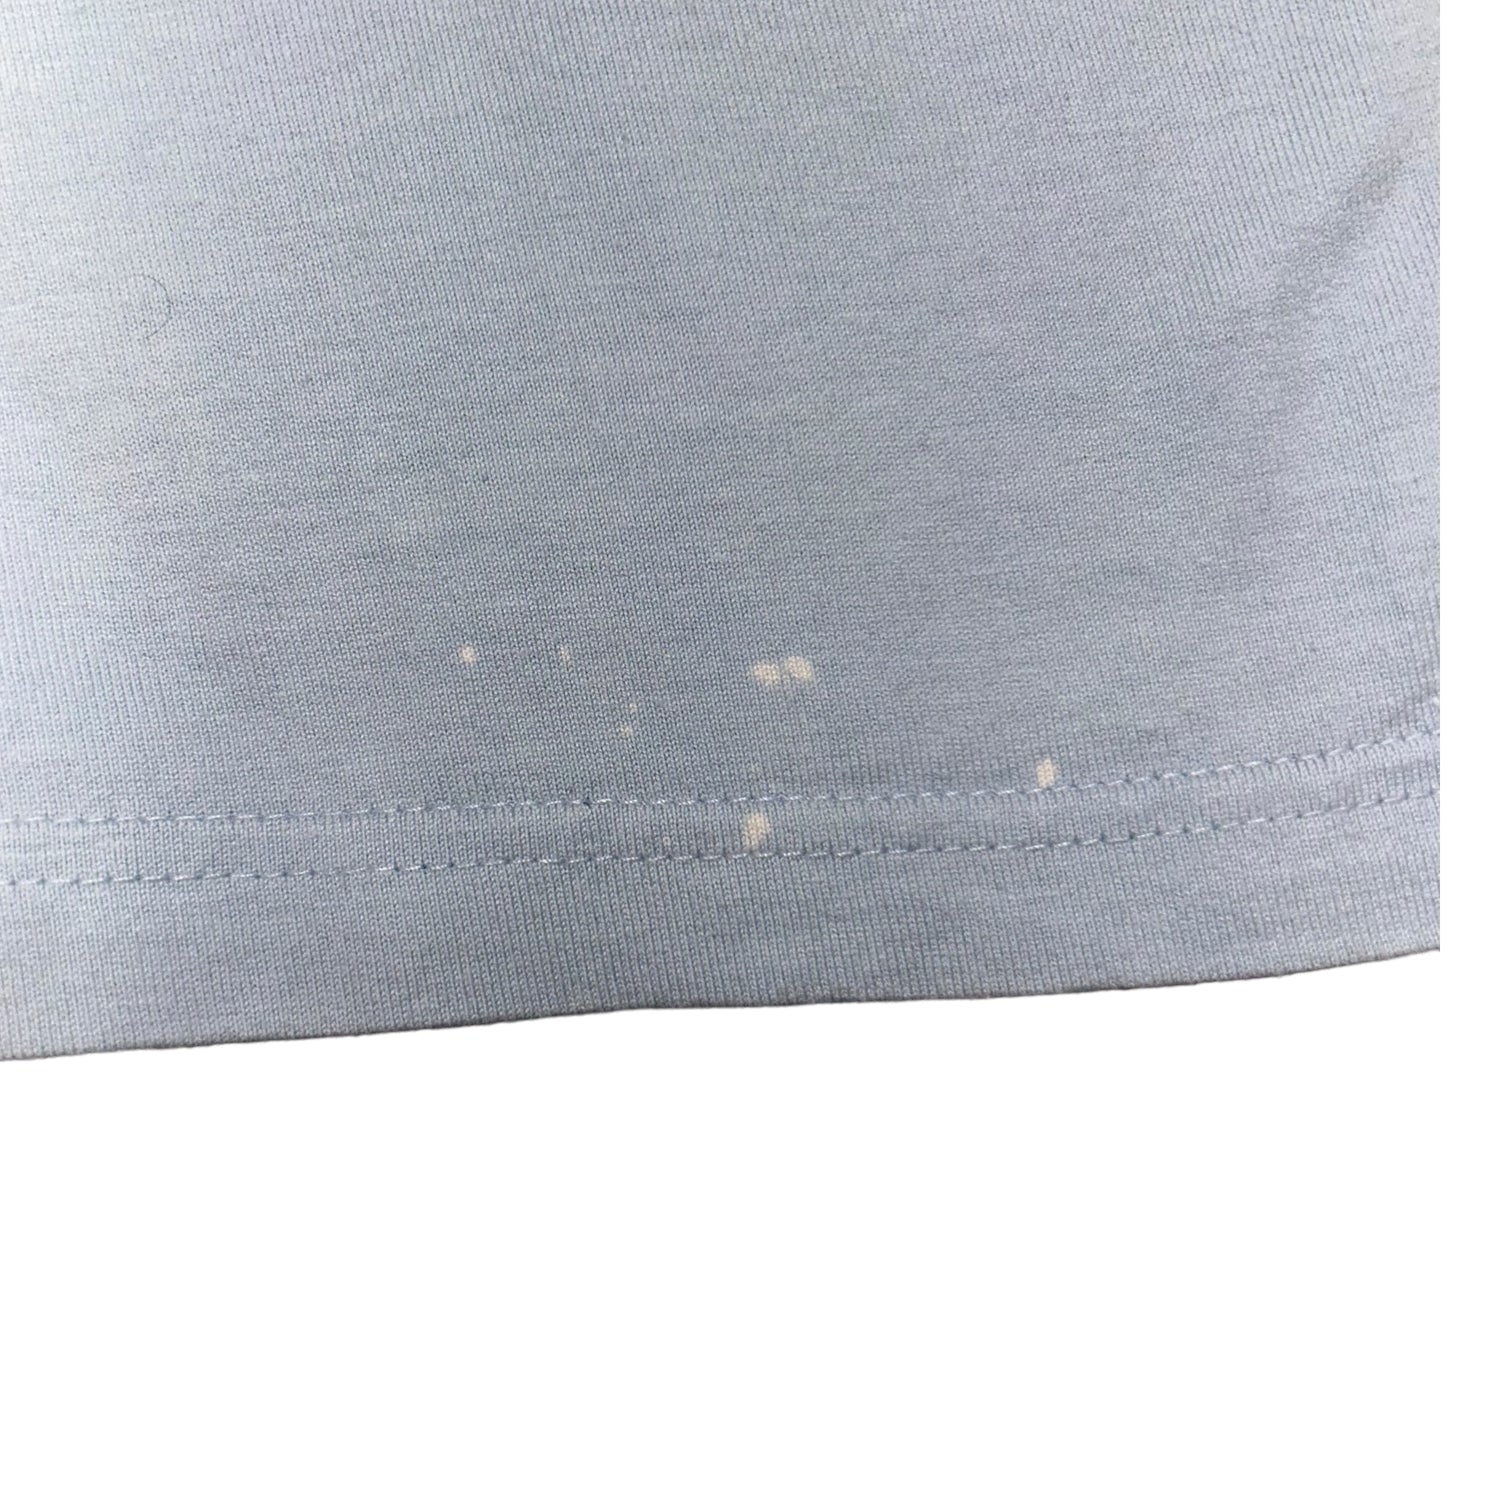 T-Shirt pelle pelle (XL)